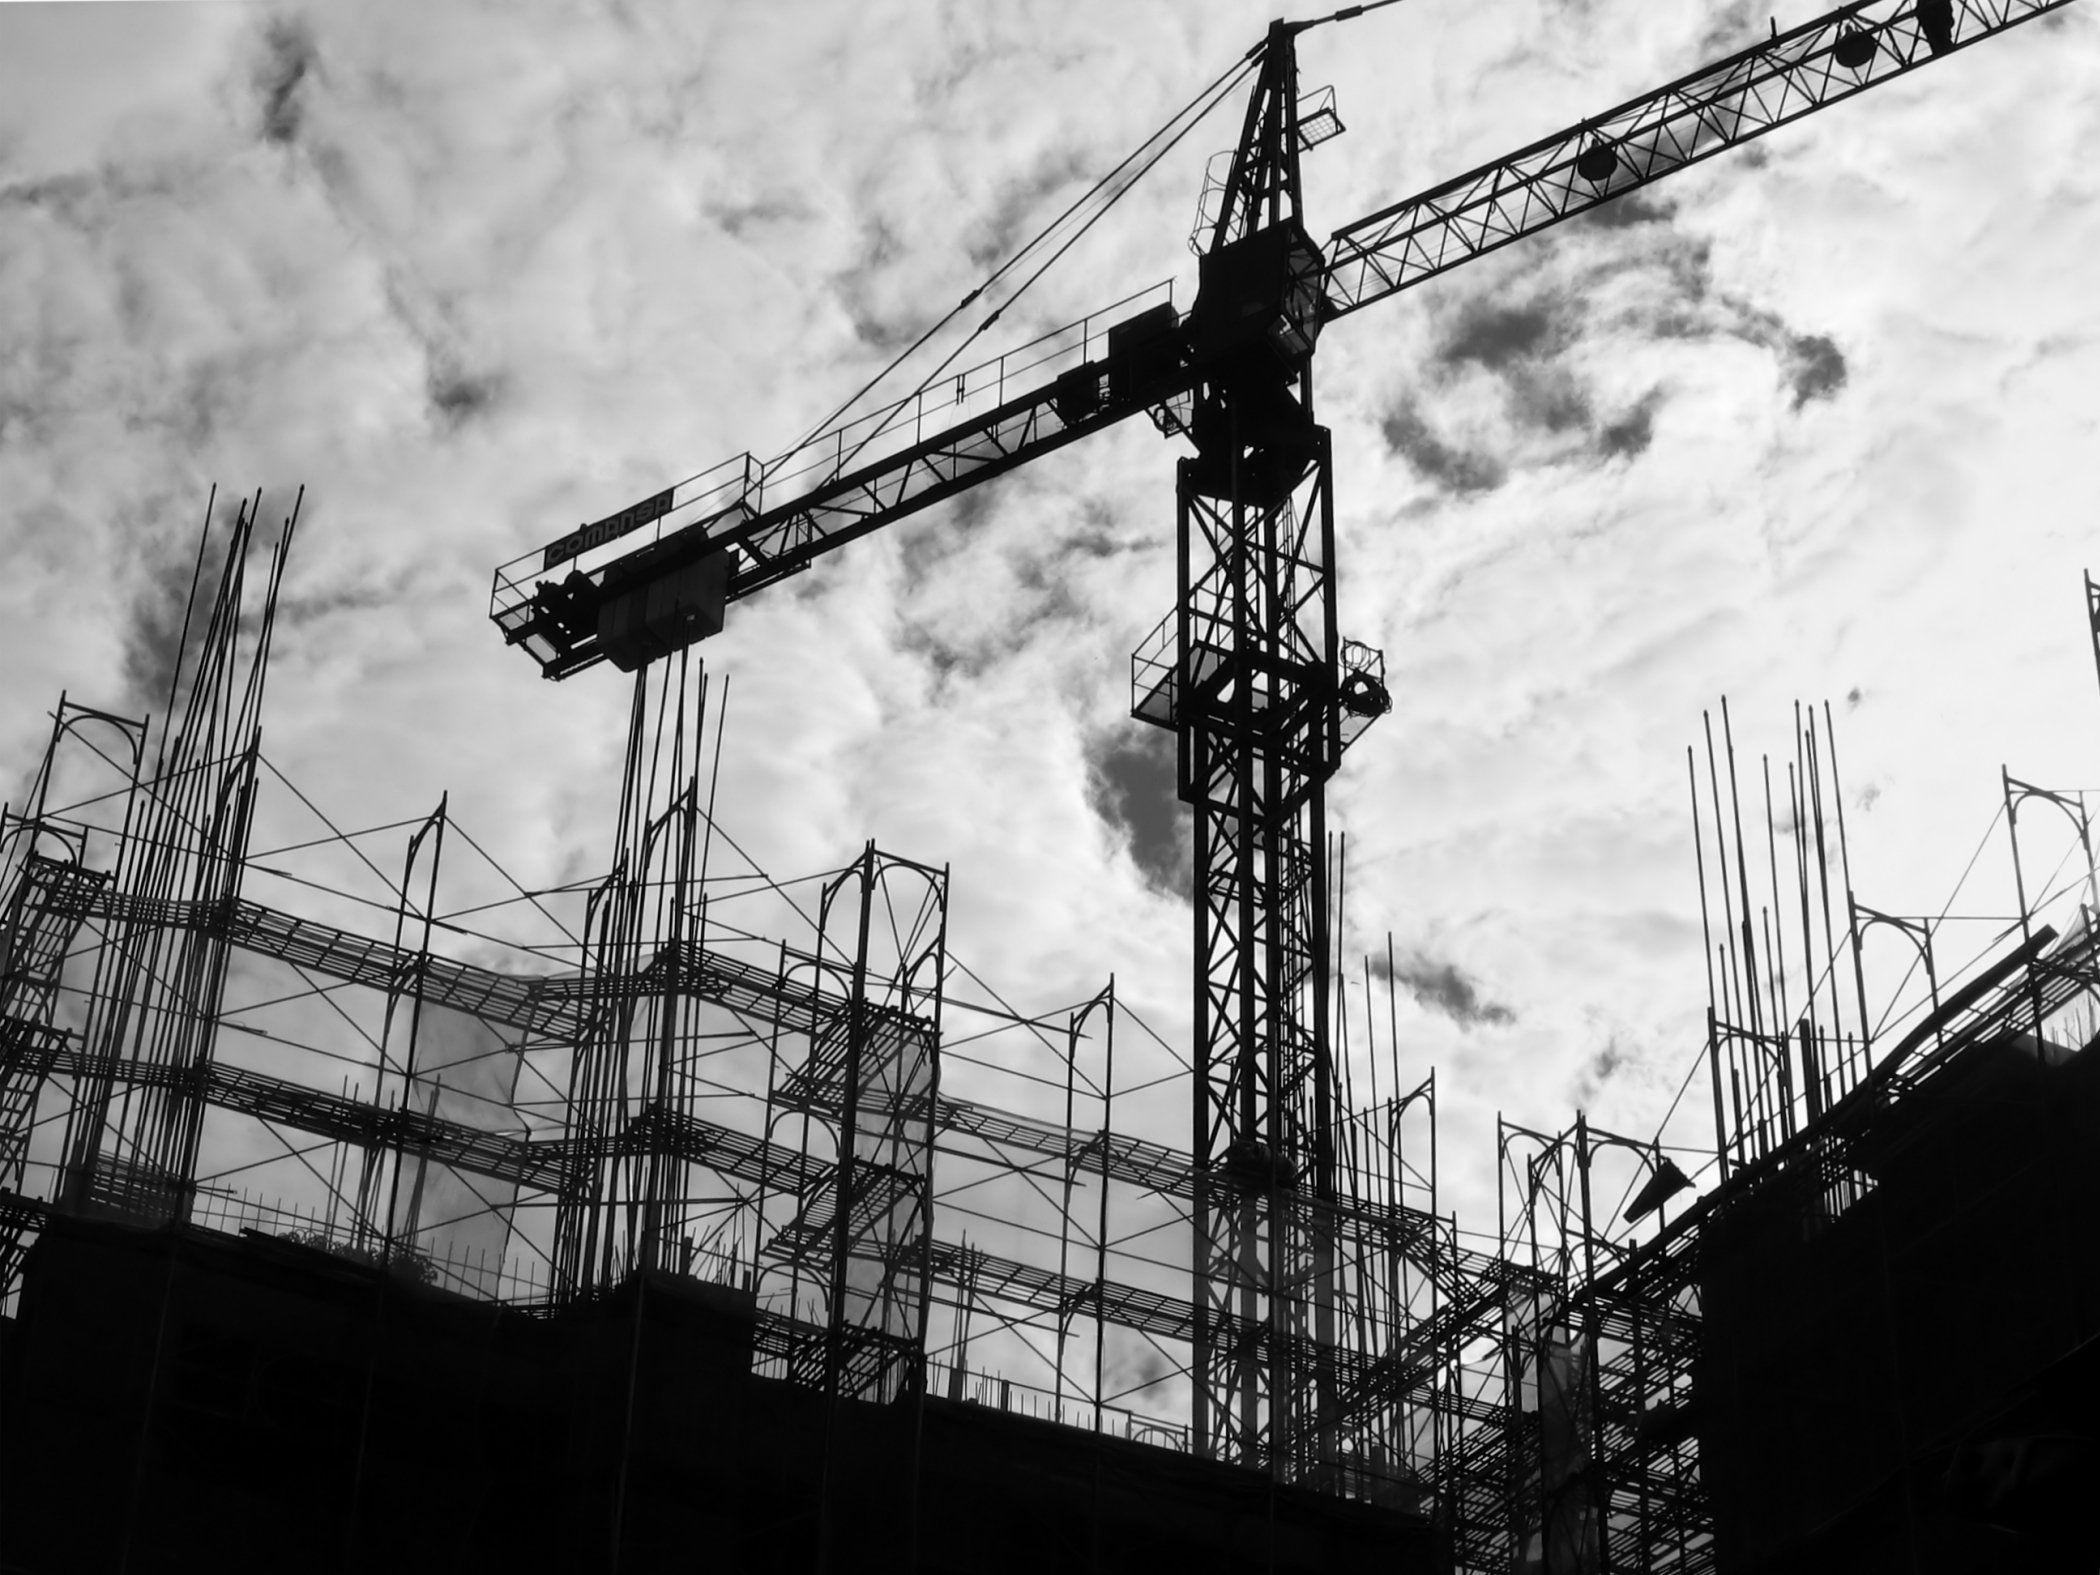 Building Construction Wallpaper Hd - Construction Hd Wallpaper ...